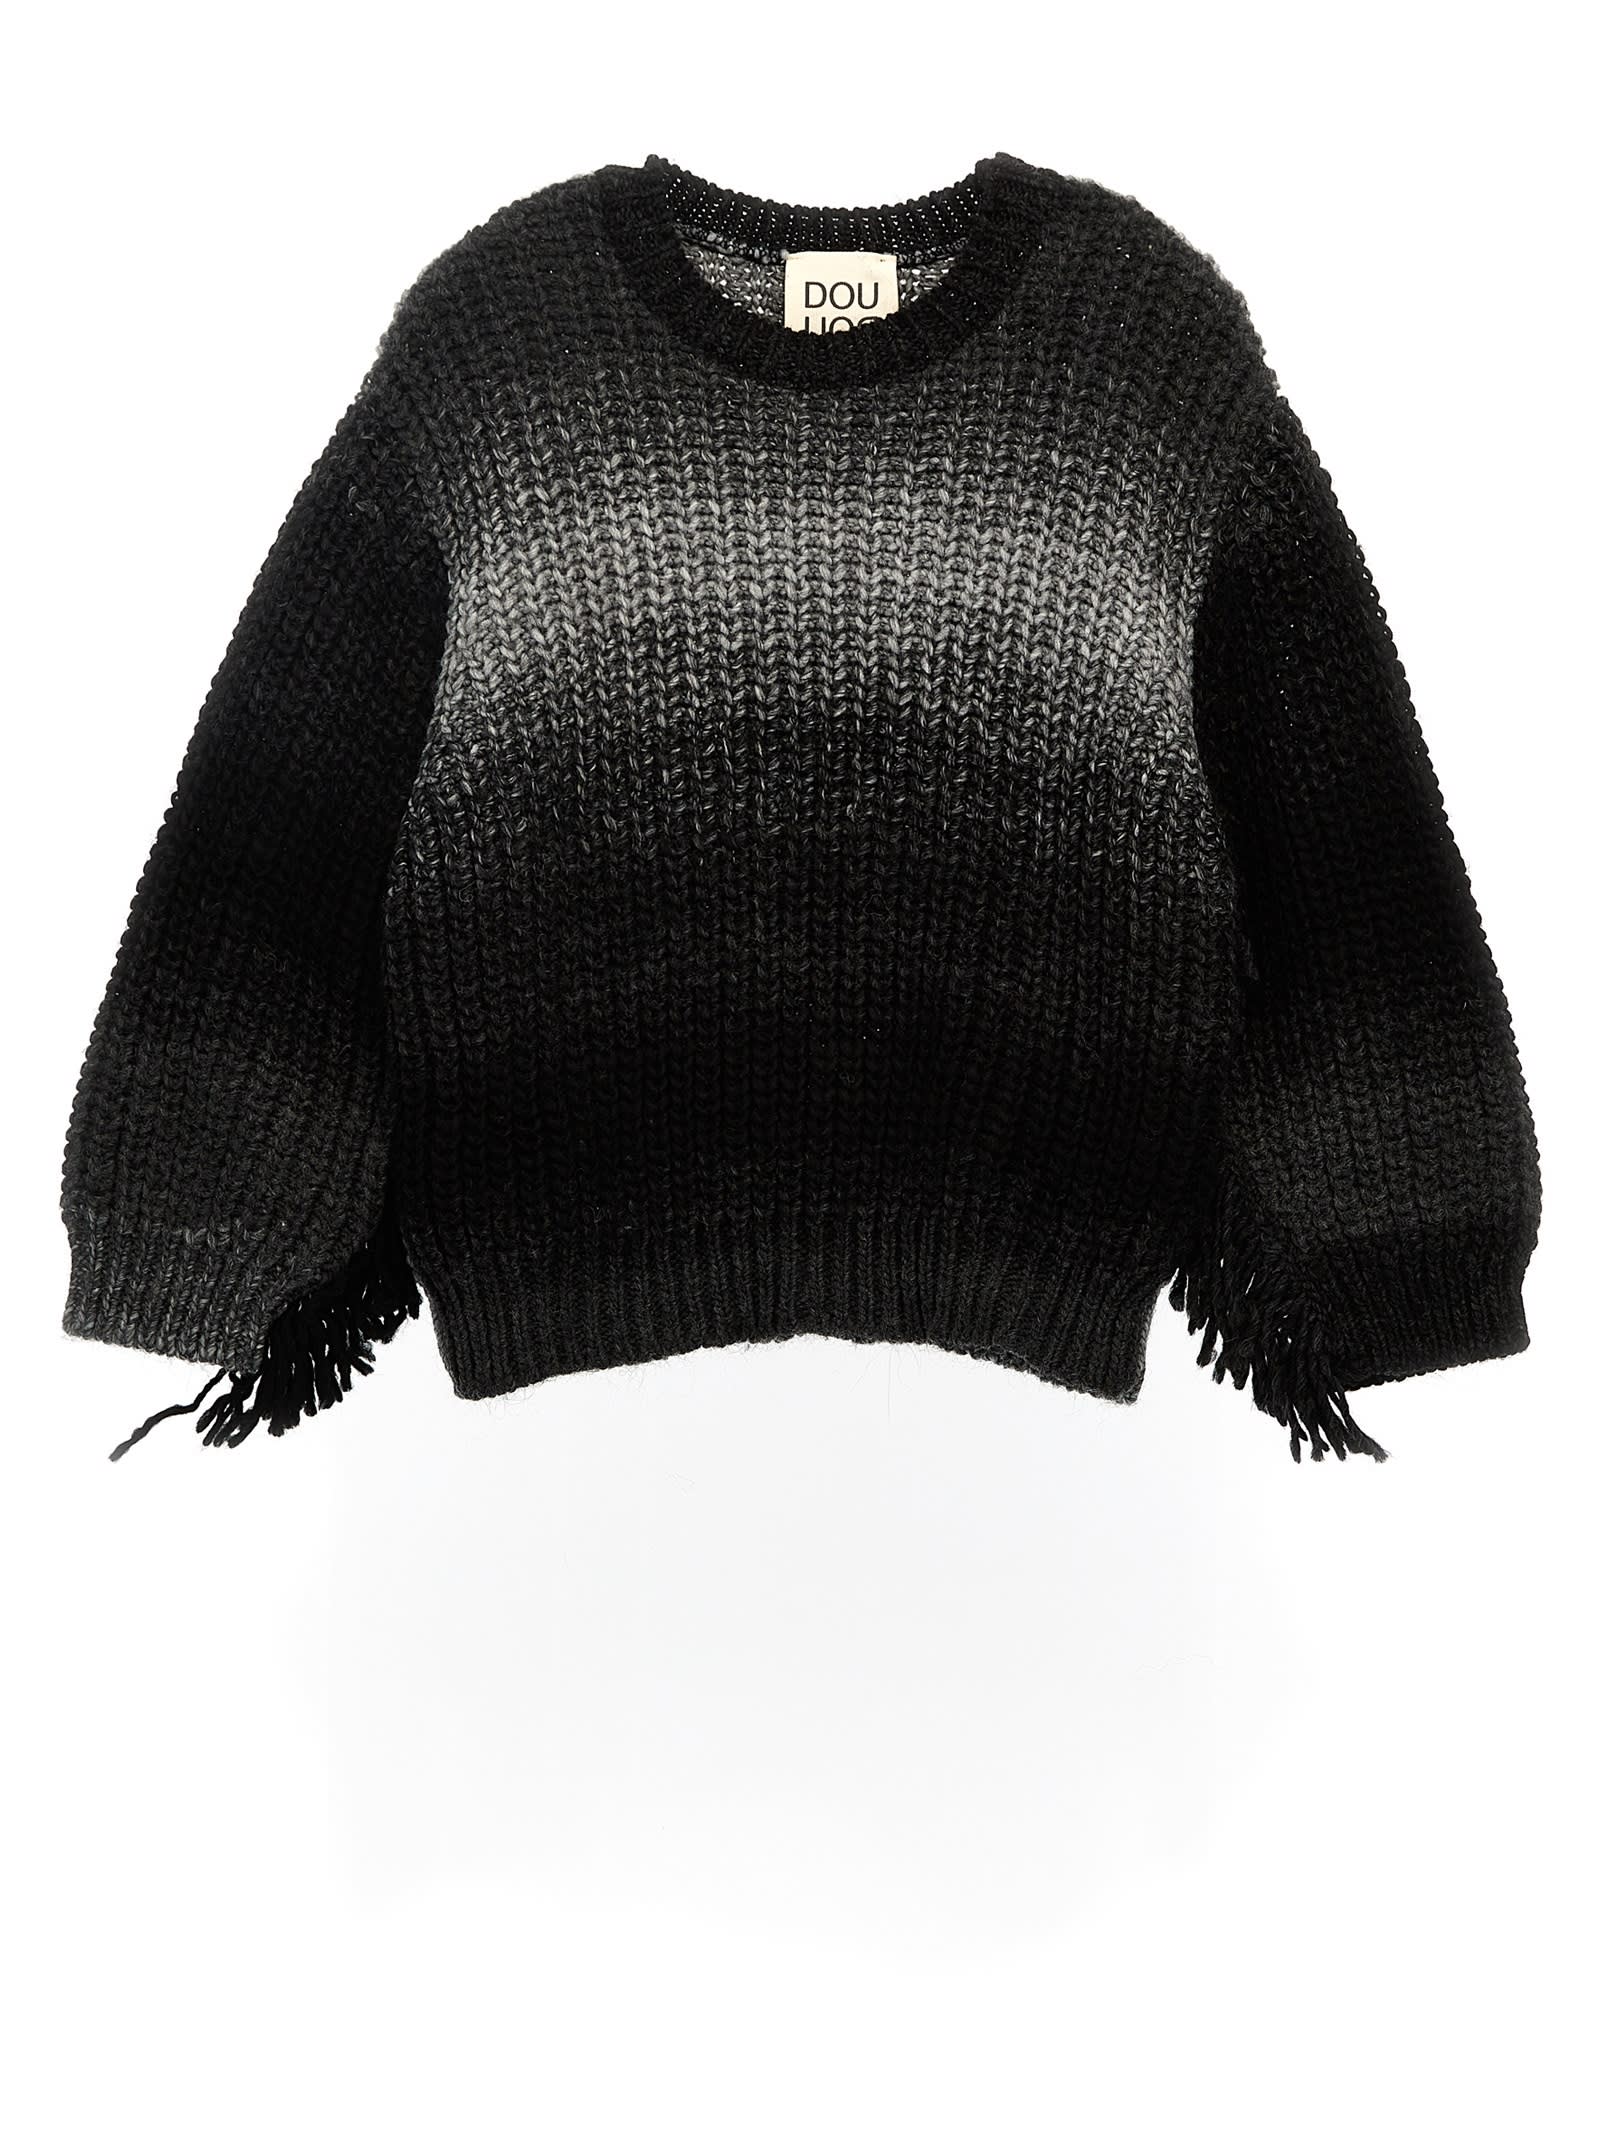 Douuod Kids' Fringed Sweater In Black